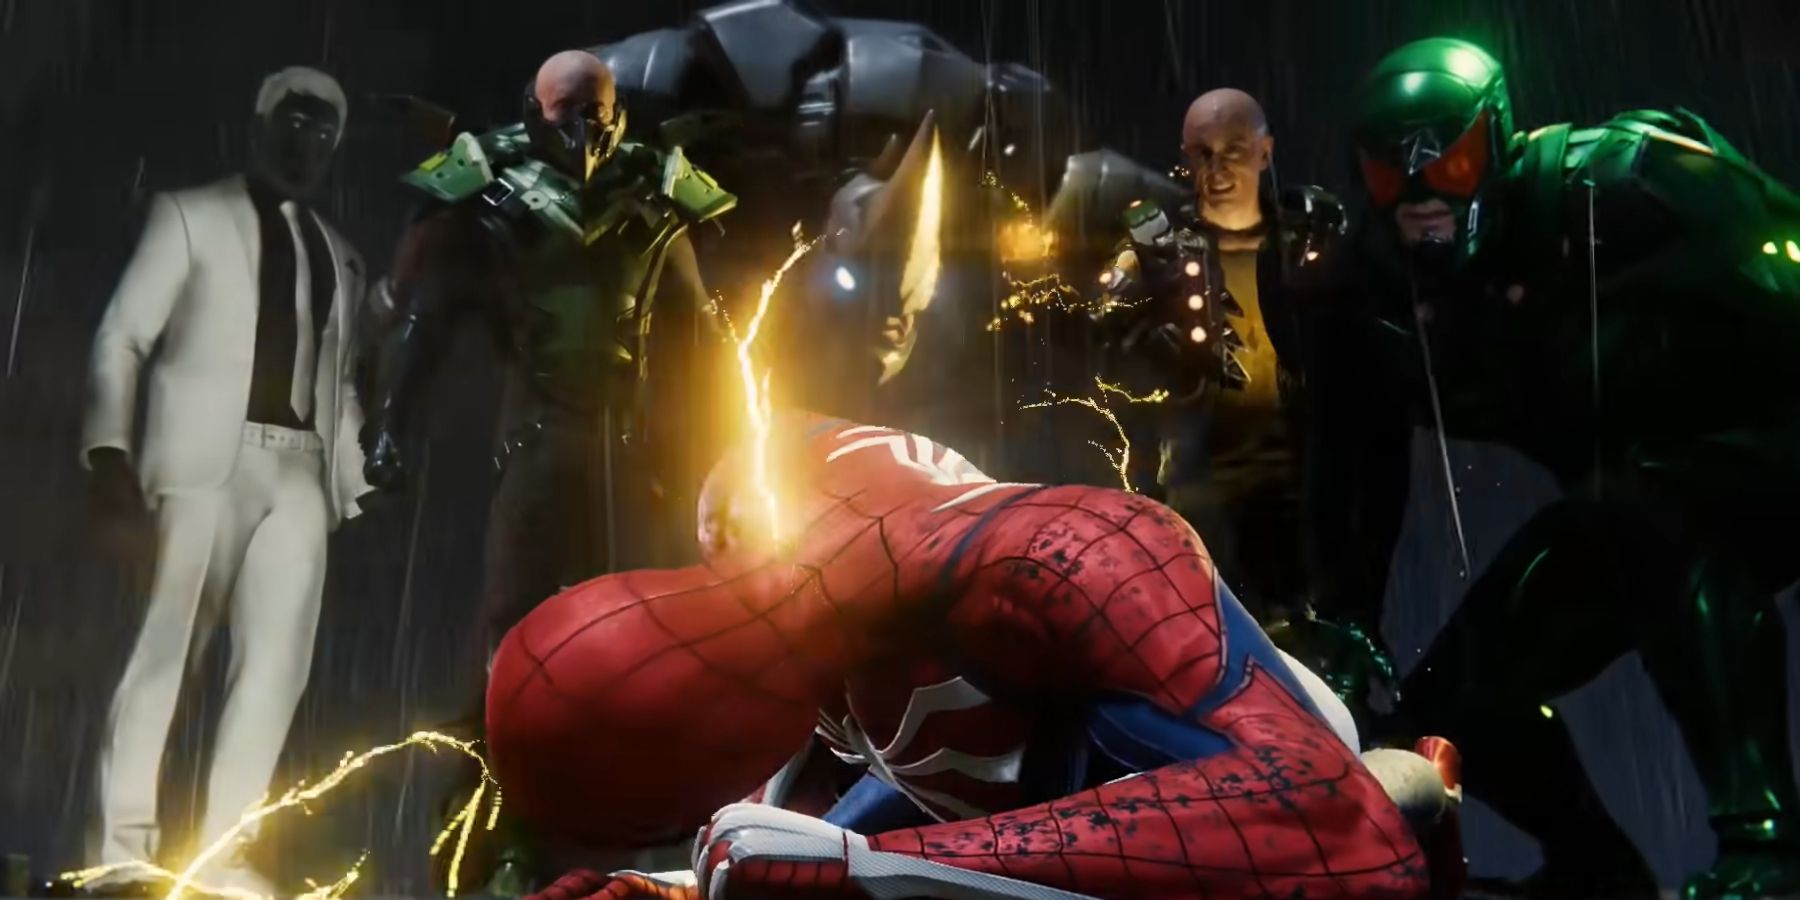 marvel's spider-man batman arkham knight feature fan request